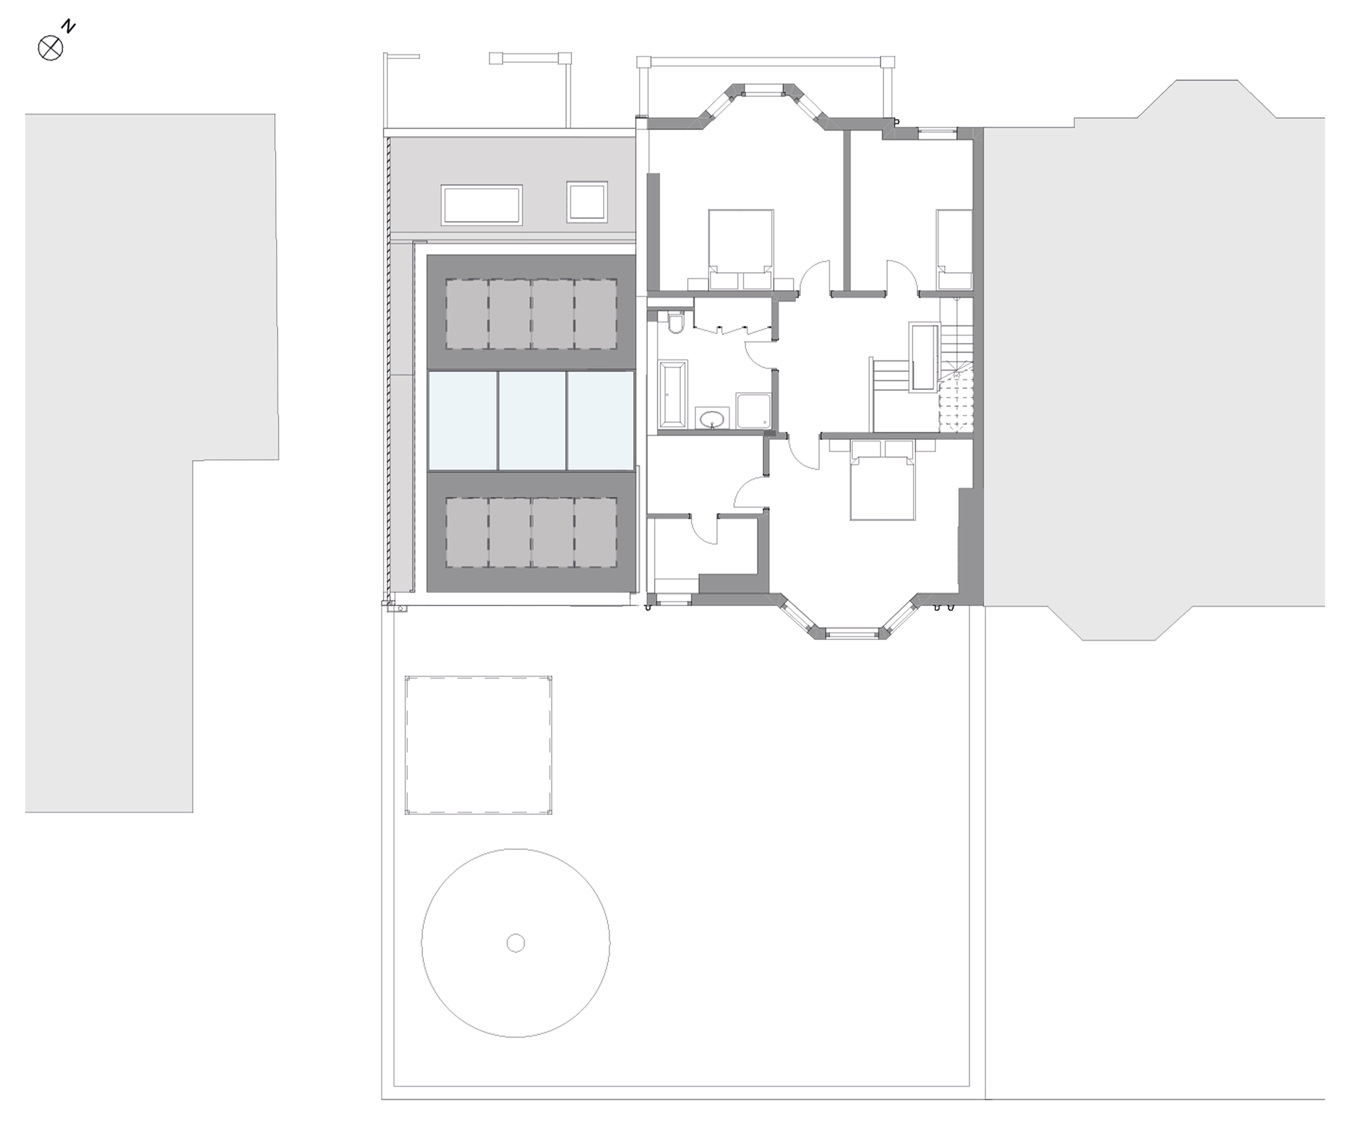 first floor plan | cdc studio cambridge architects